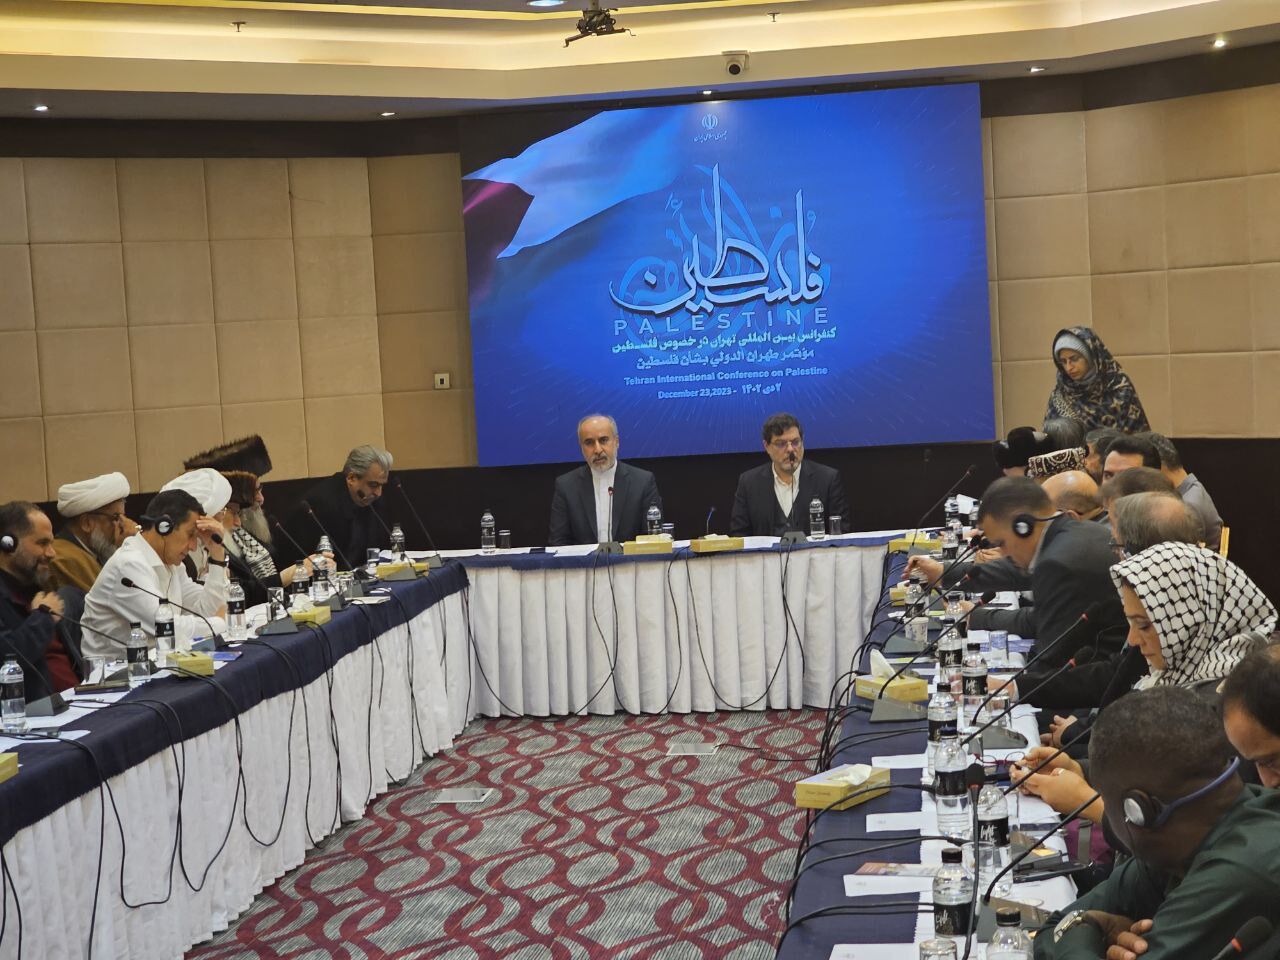 Comprehensive report on Tehran International conference on Palestine